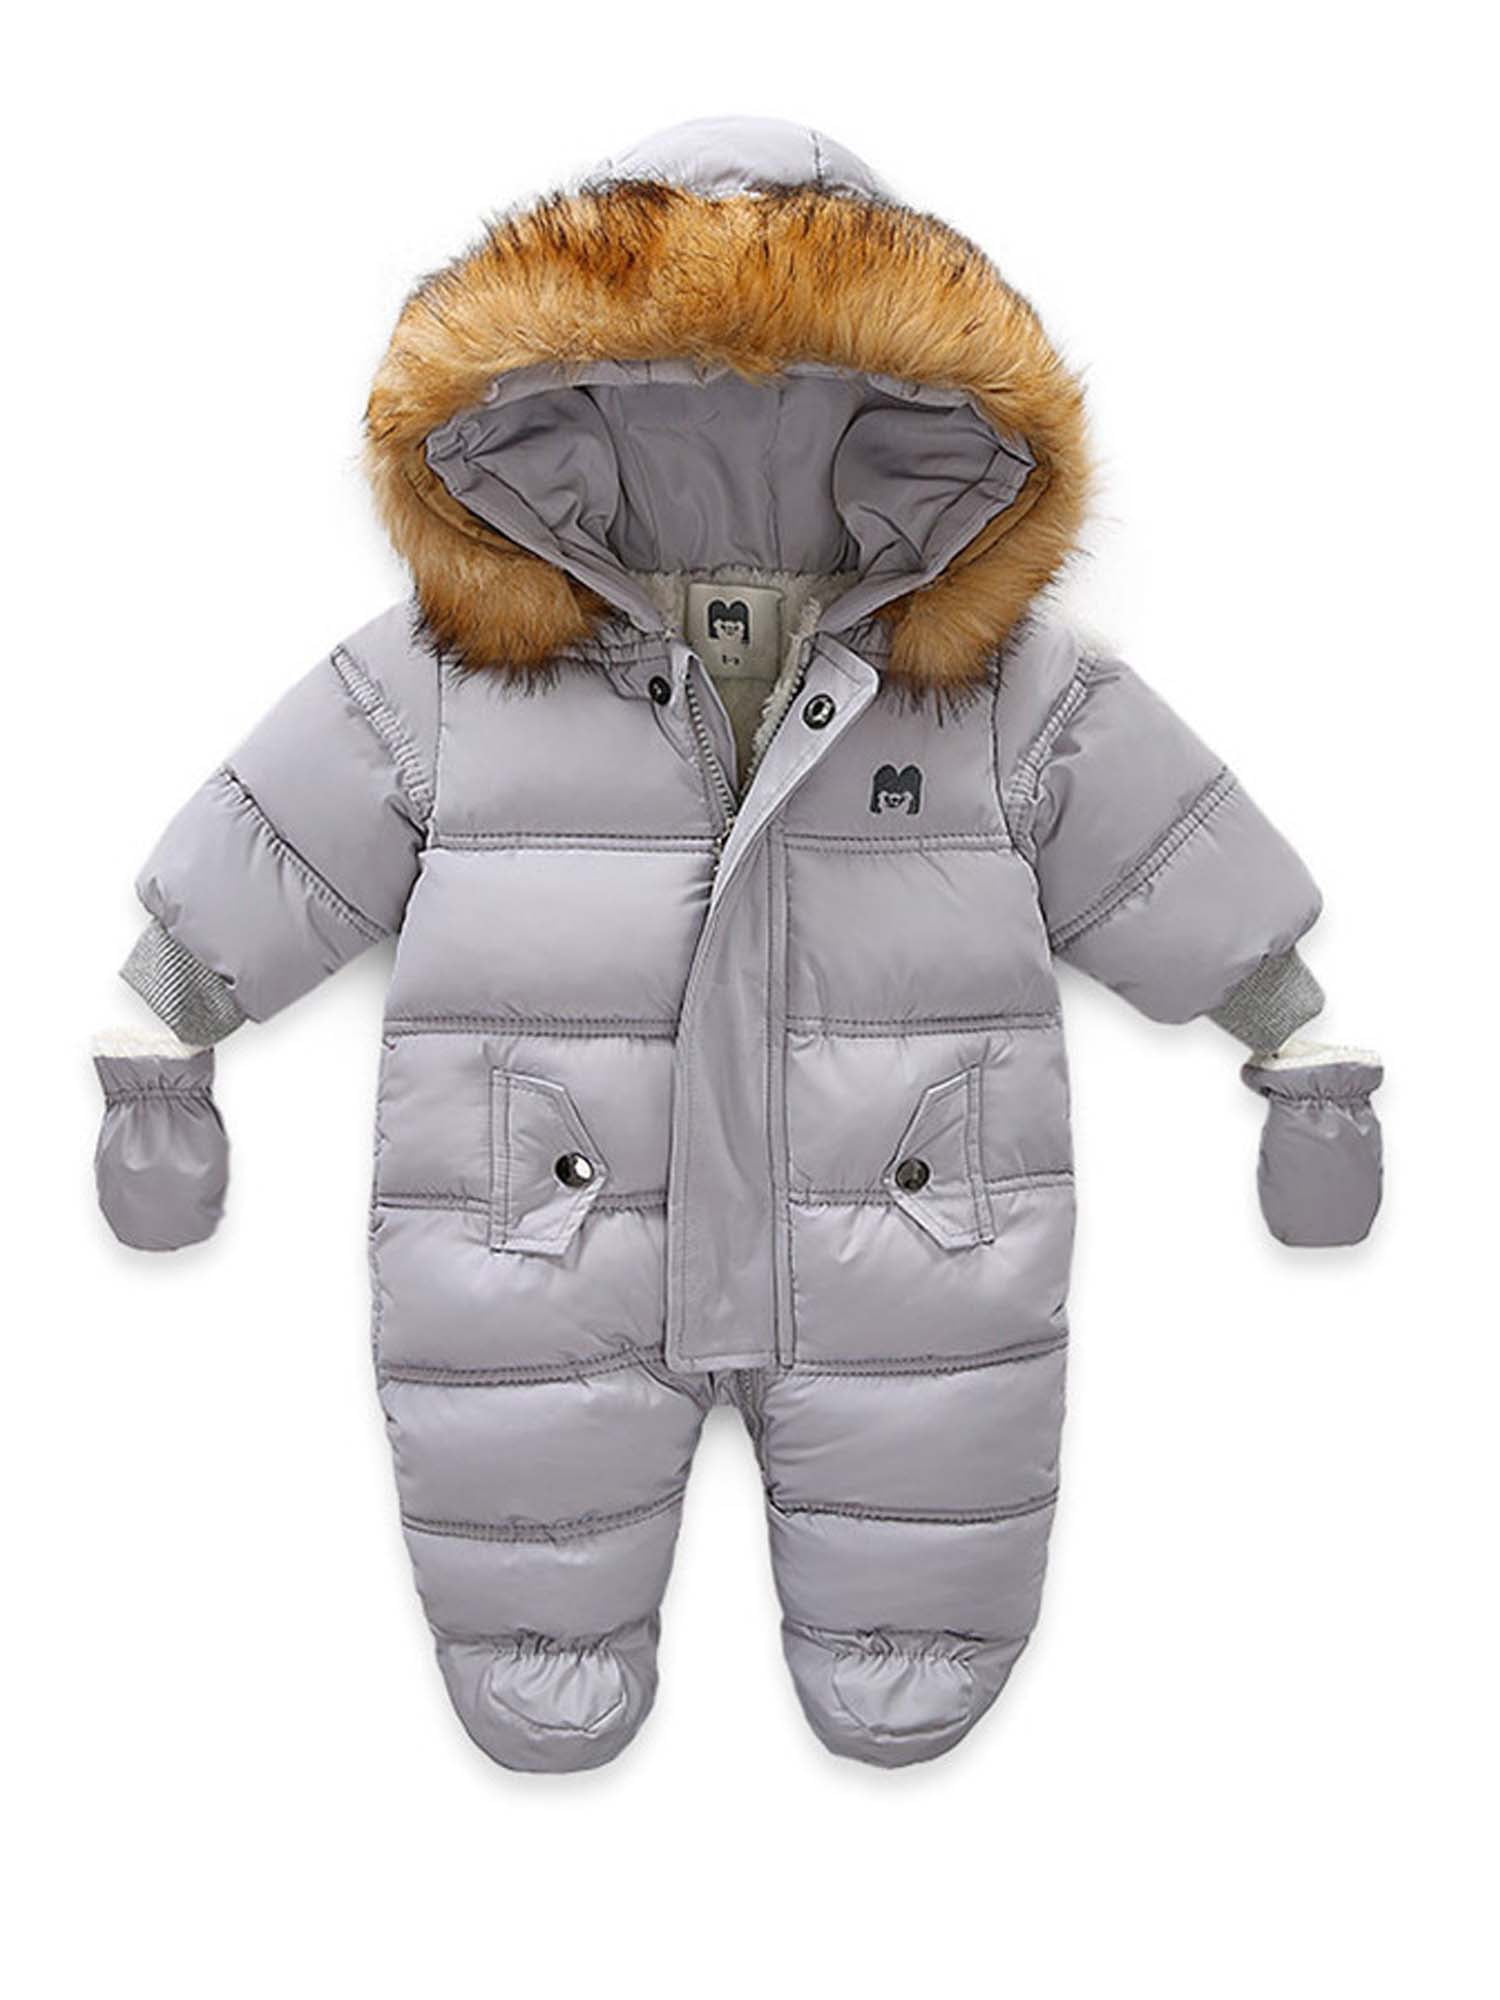 Toddler Baby Boys spring winter Zipper Hooded Coat Snowsuit Outerwear Jacket 